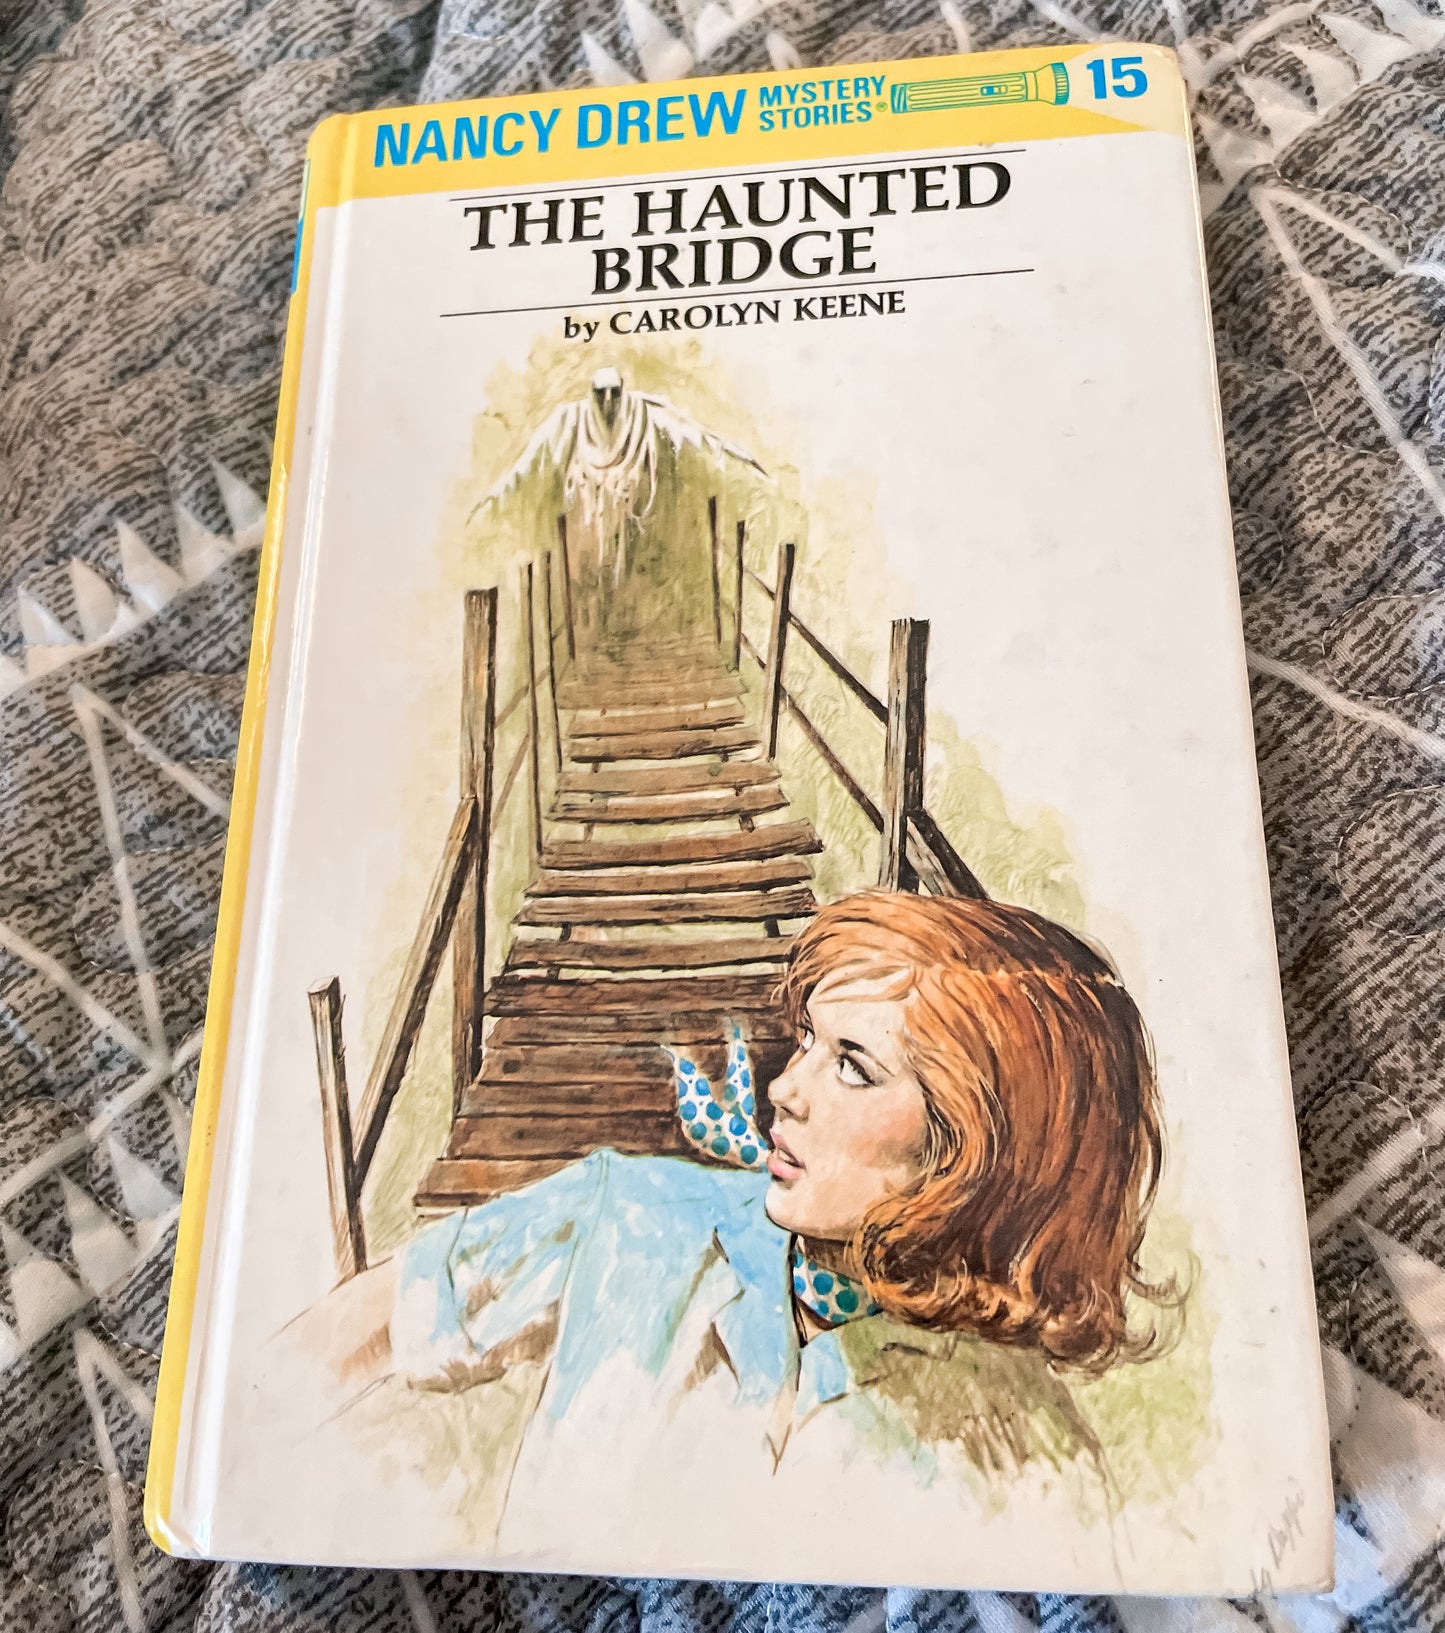 The Haunted Bridge by Carolyn Keene (Nancy Drew Mystery Stories #15)